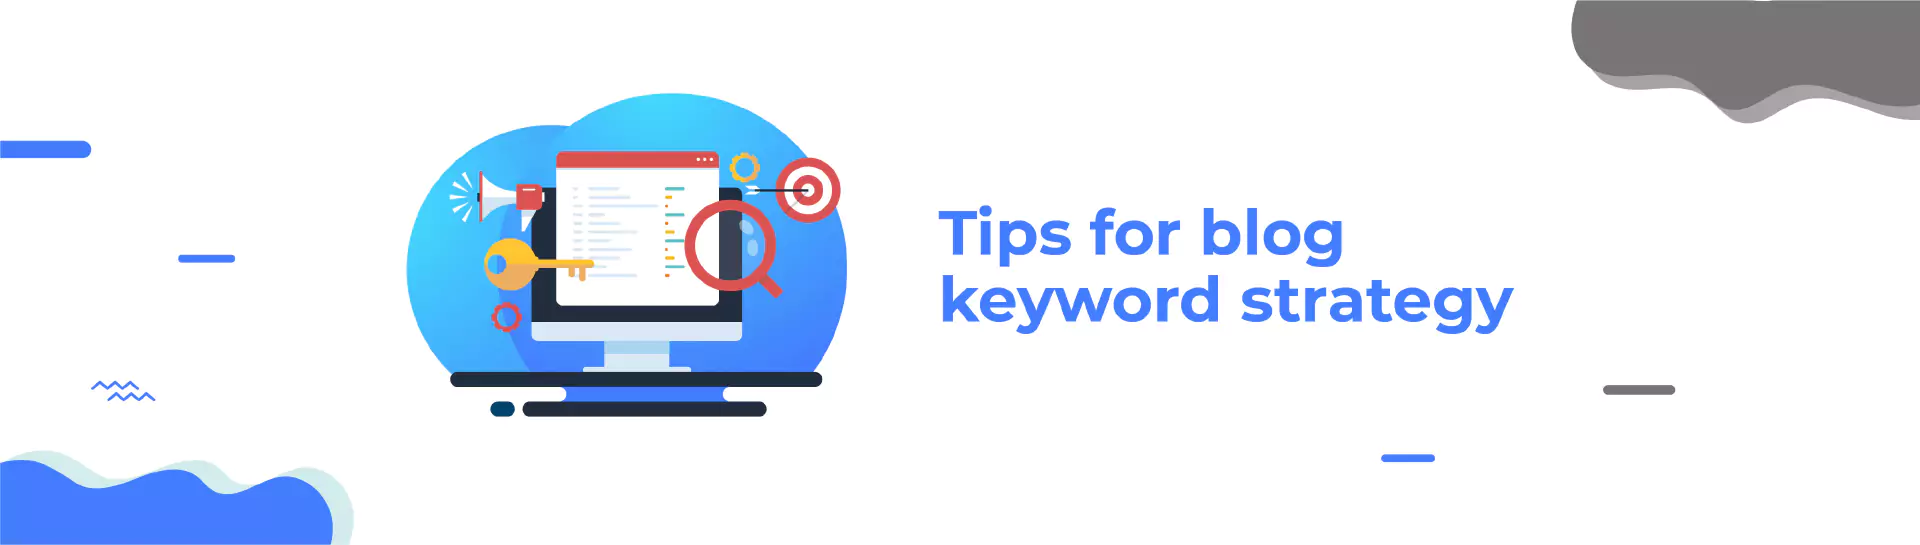 6 Tips for Blog Keyword Strategy